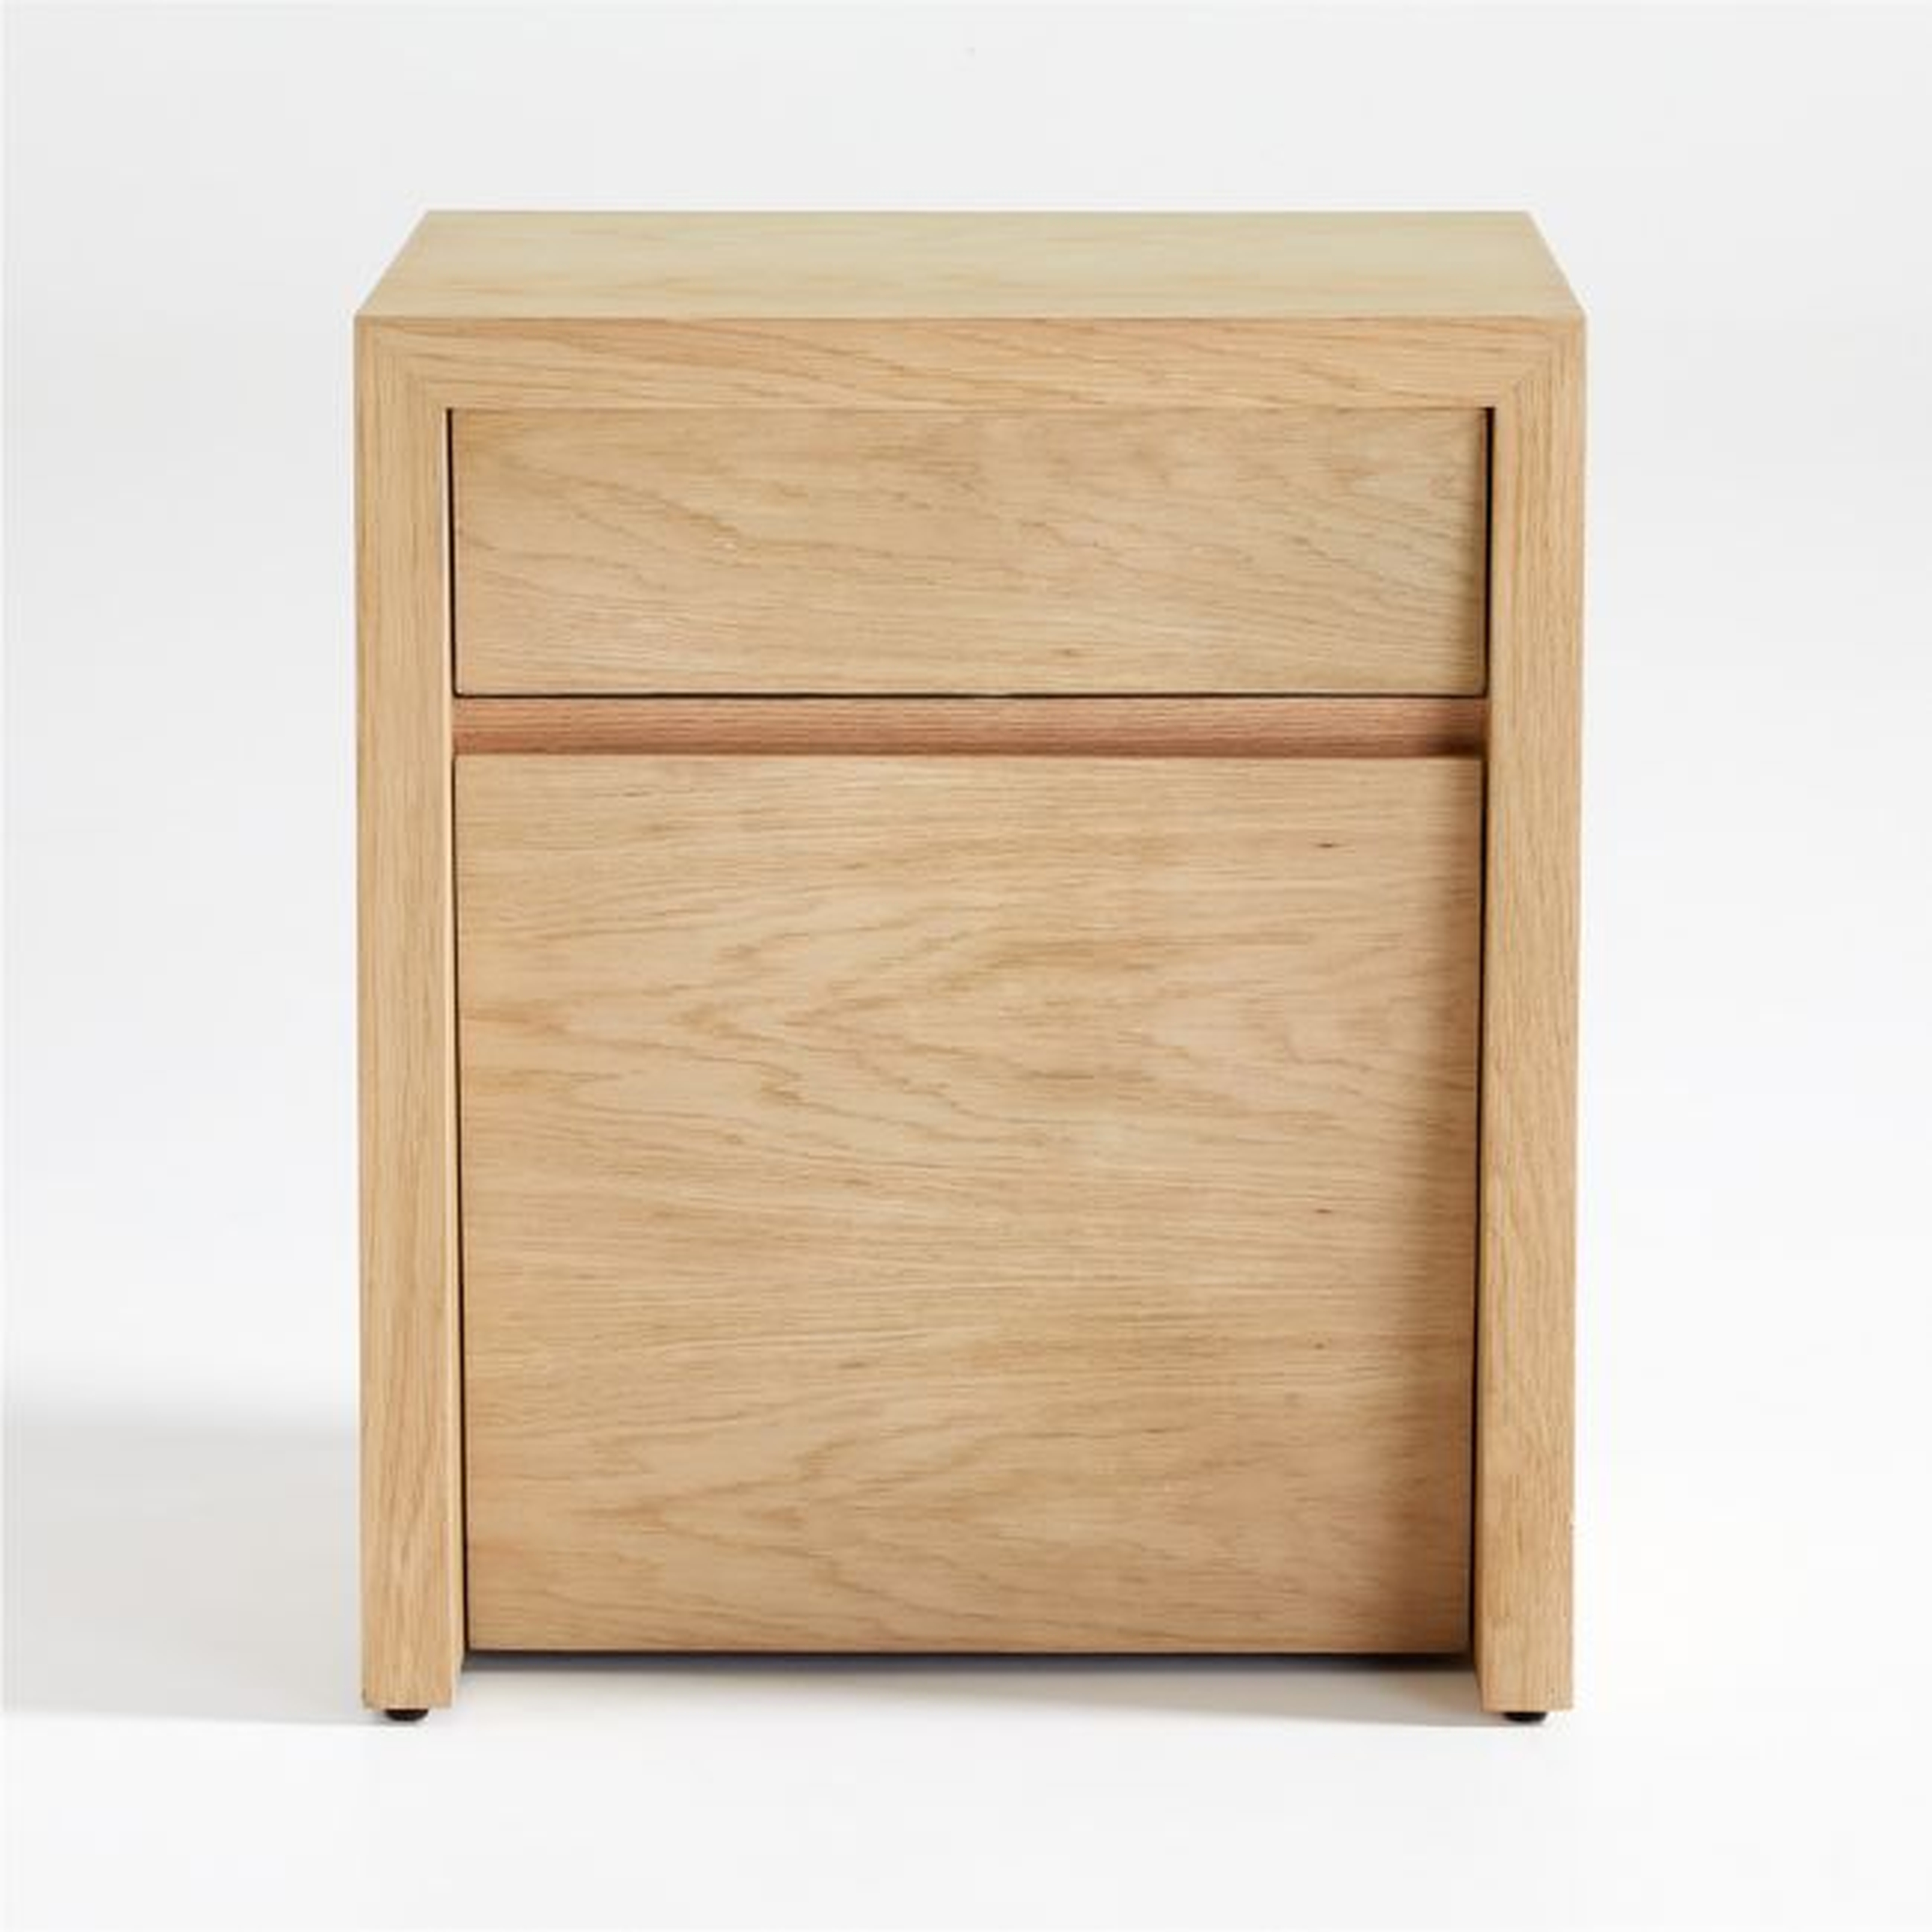 Vander Natural Wood Storage End Table - Crate and Barrel